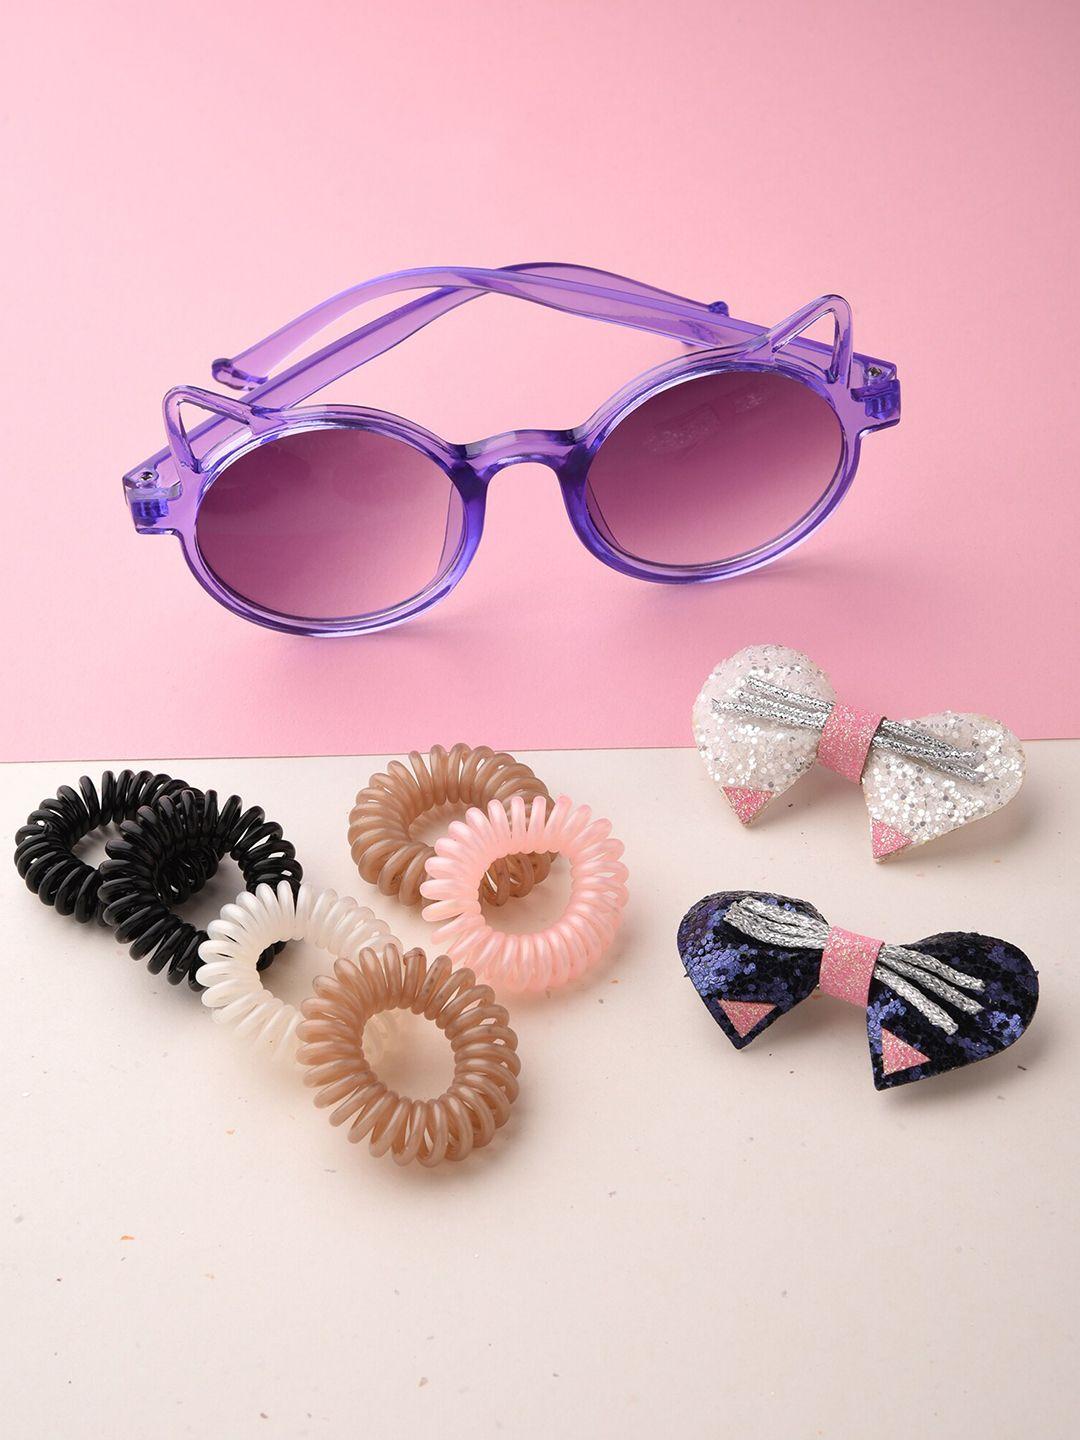 toniq kids girls purple & black 8-pieces hair accessory set with sunglasses